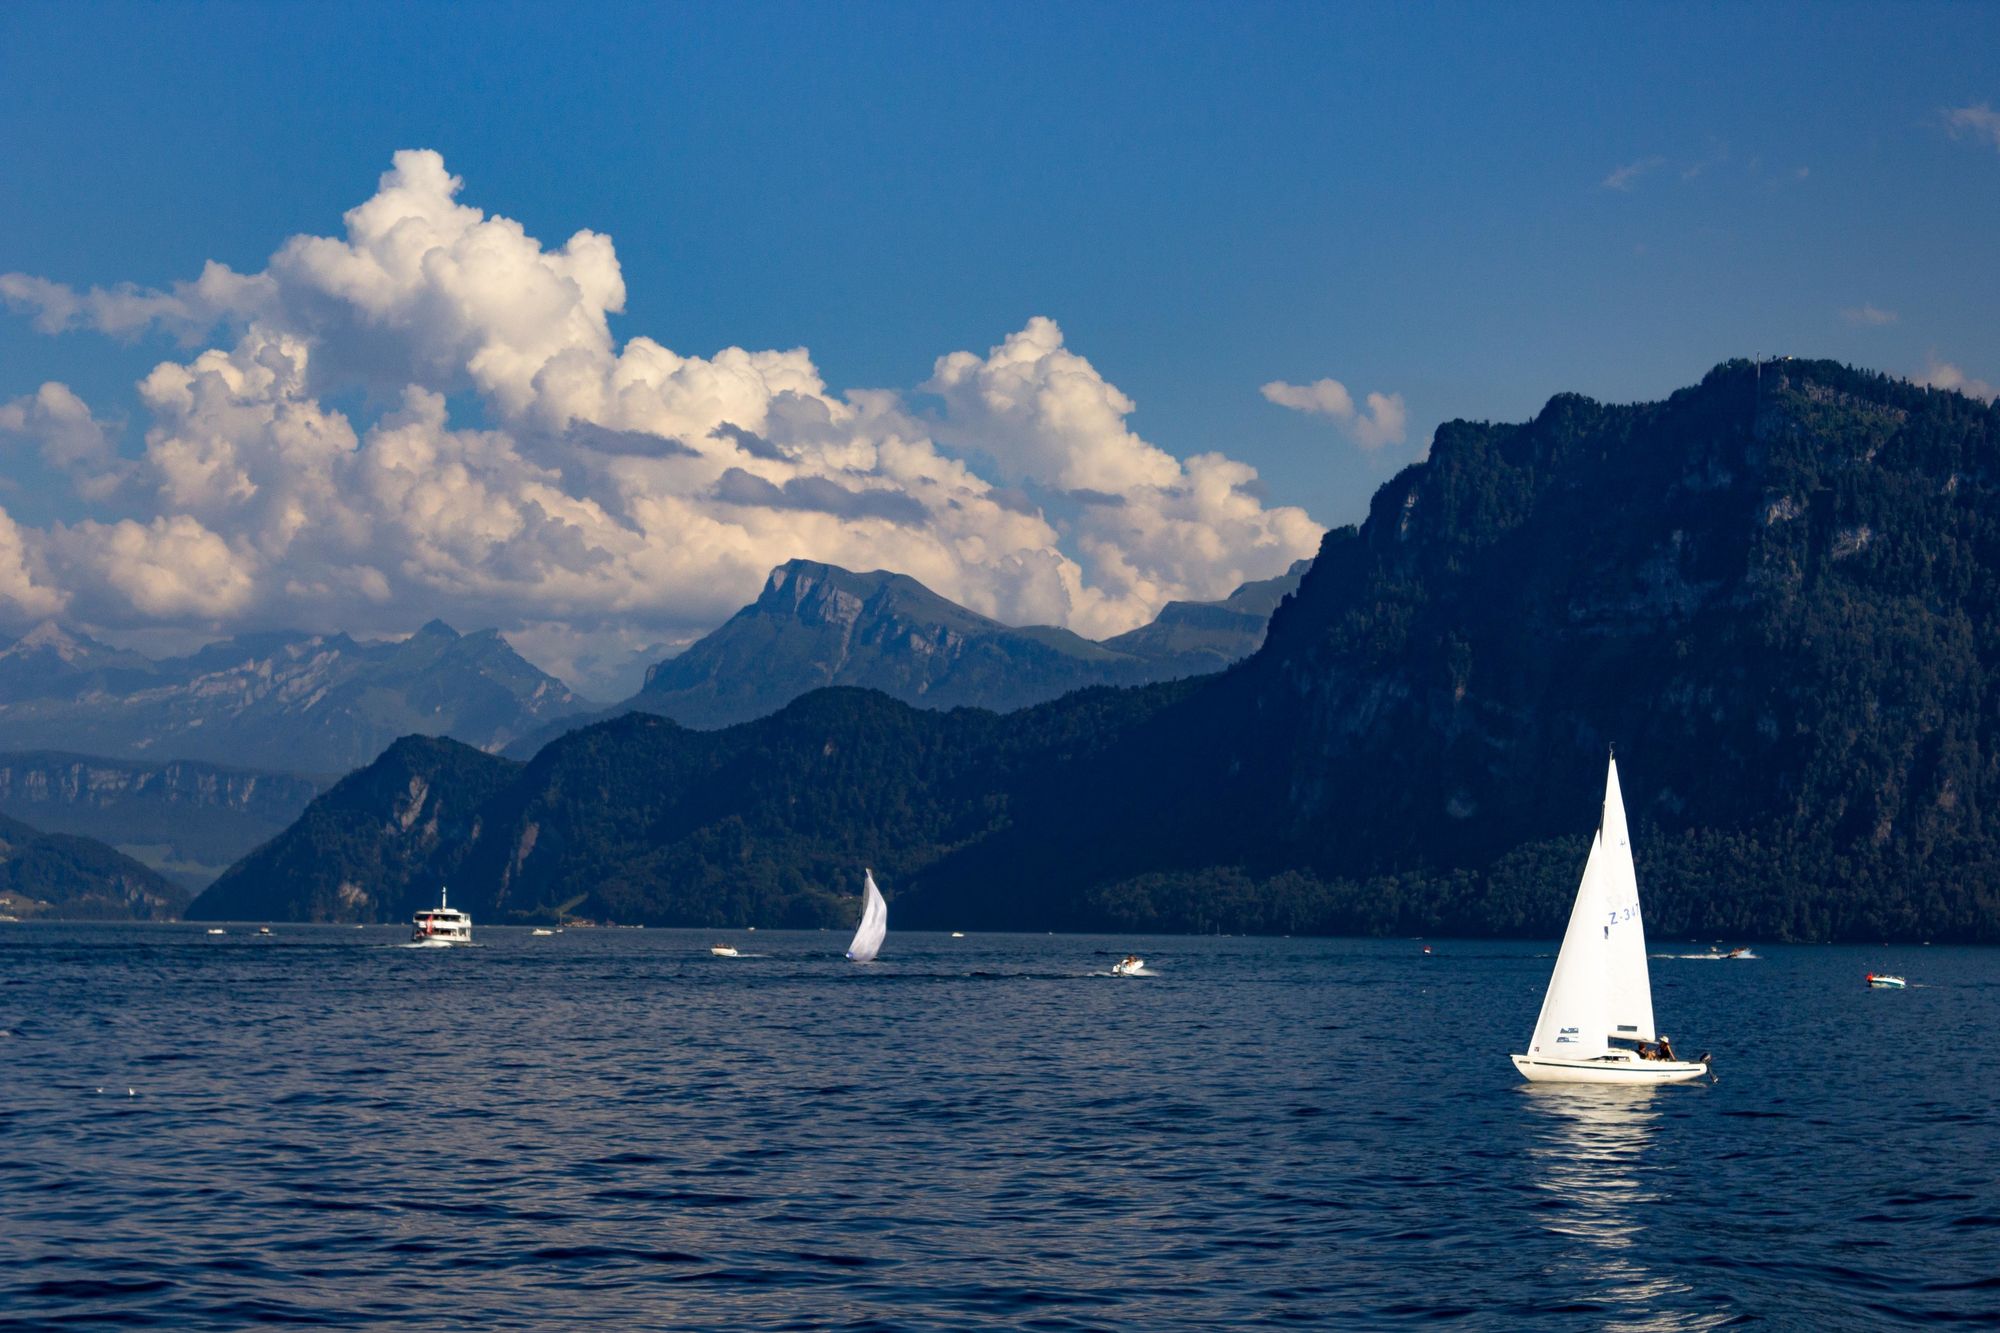 Sailing on Lake Lucerne